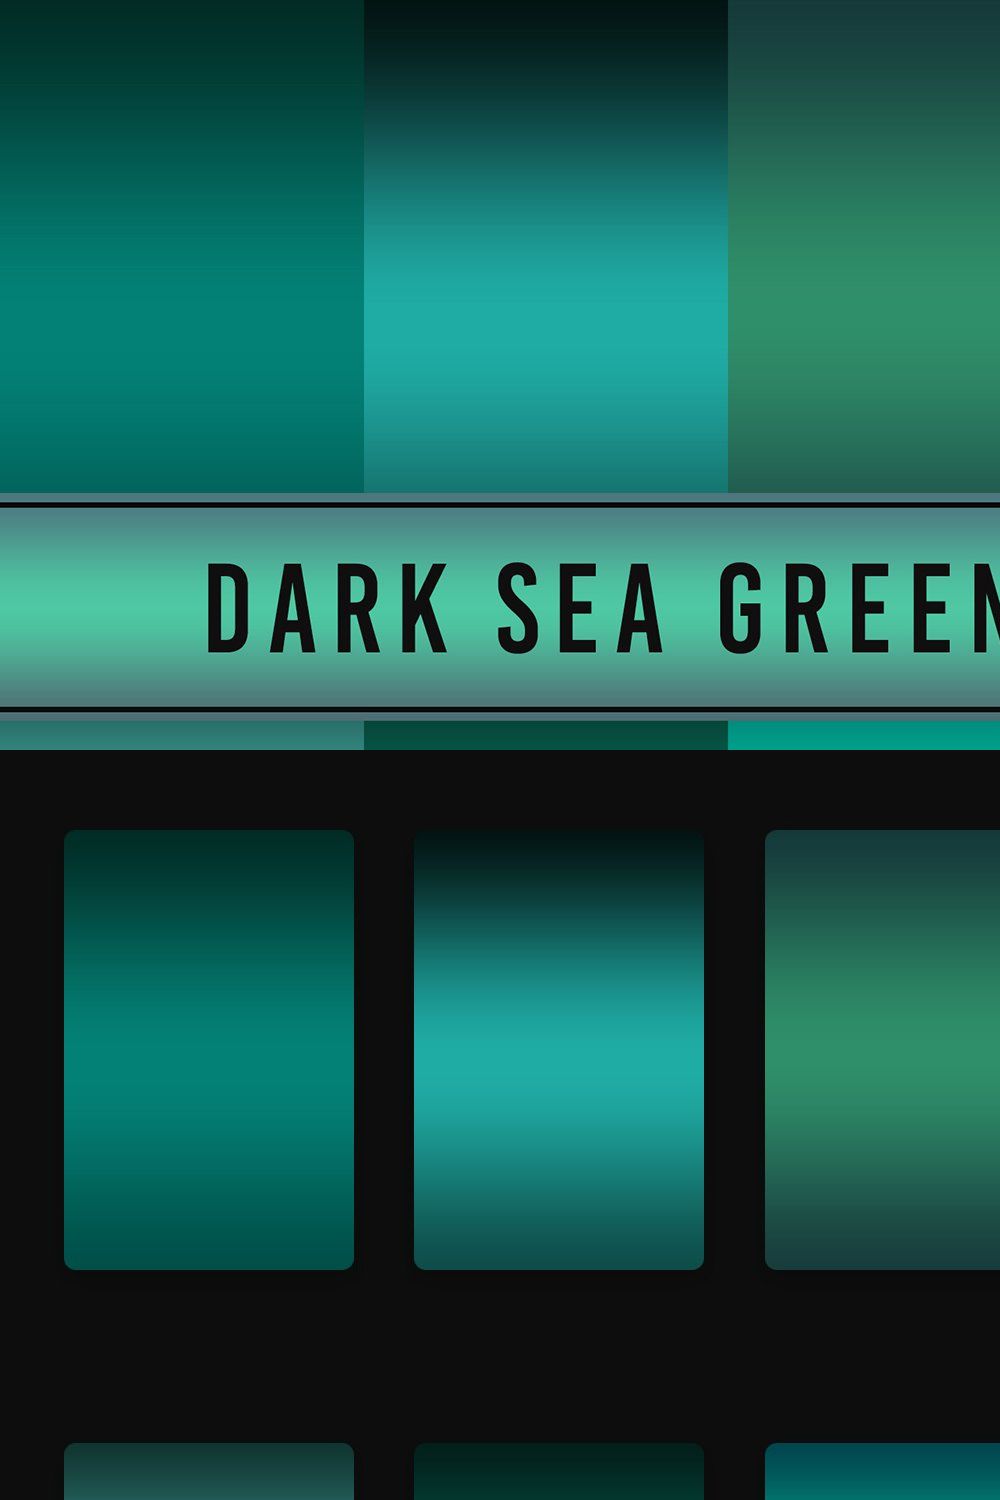 Dark Sea Green Gradients pinterest preview image.